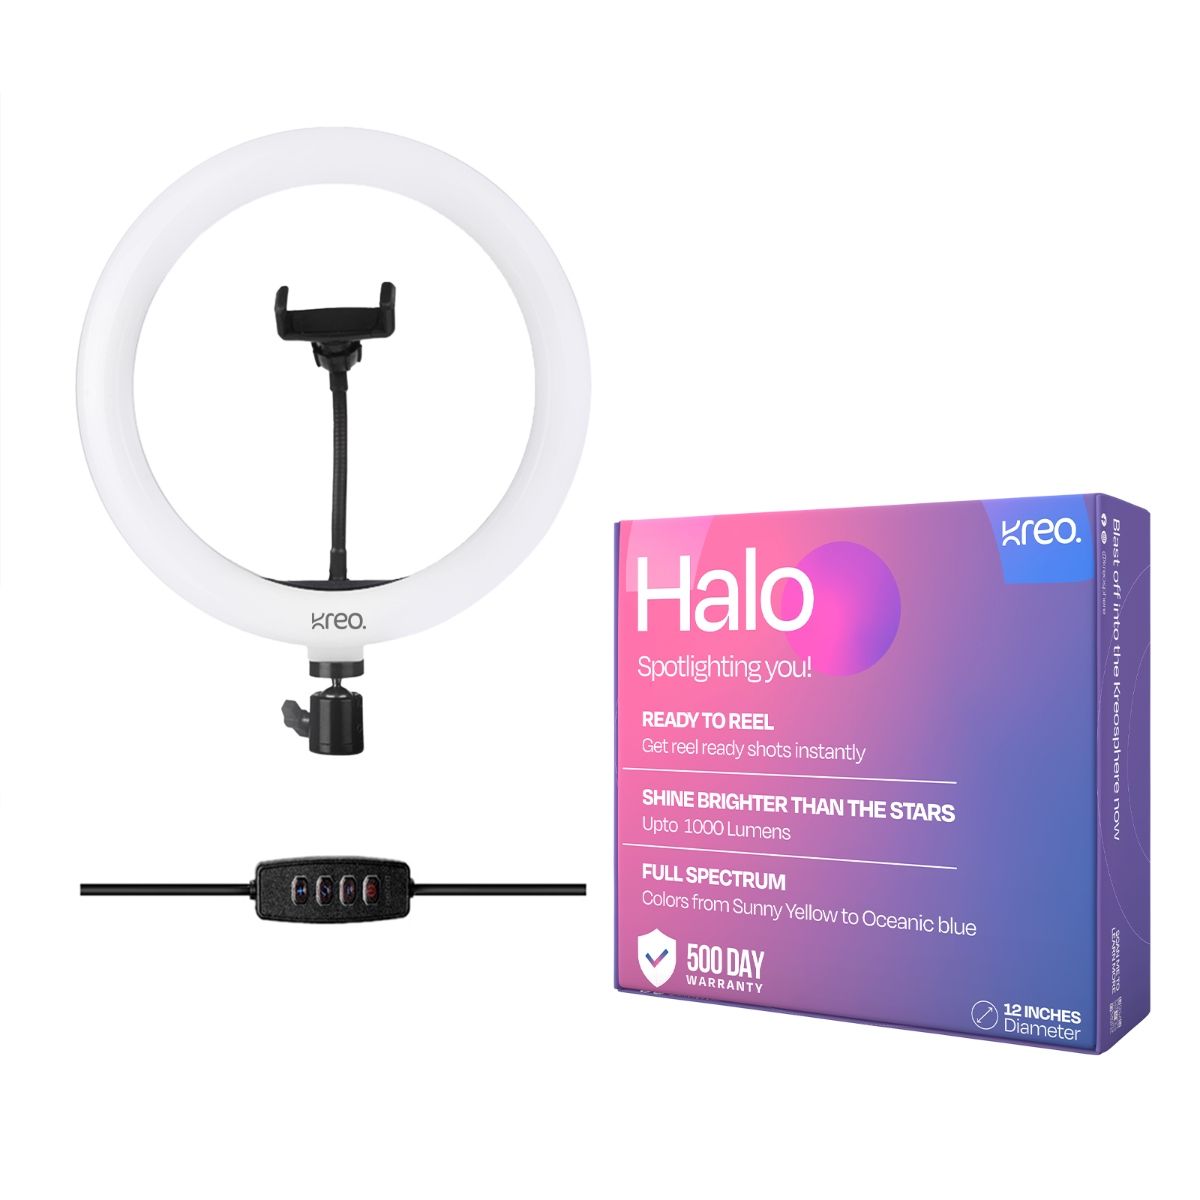 Kreo Halo 12 Inch Selfie Ring Light 3 Colour Modes Best for Reels, YouTube, Makeup Ring Flash White